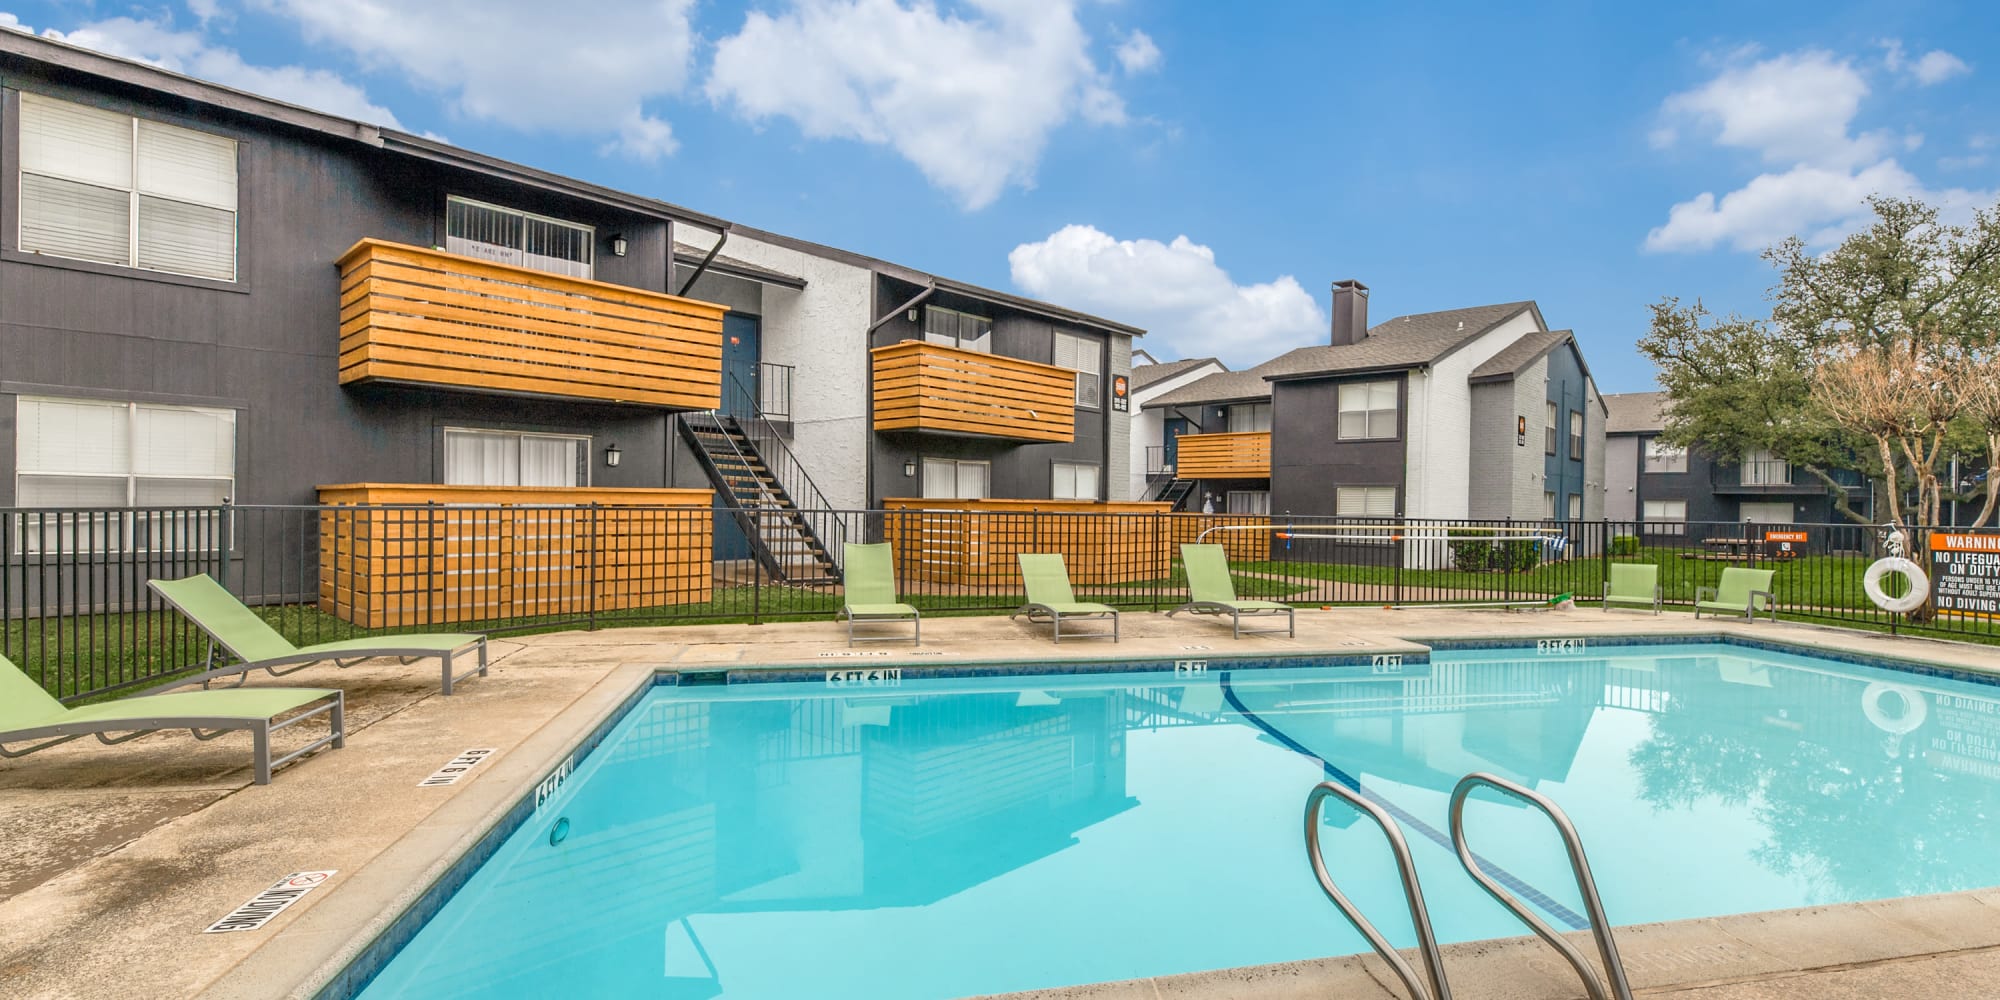 Swimming pool at Emmitt Luxury Apartments in Haltom City, Texas